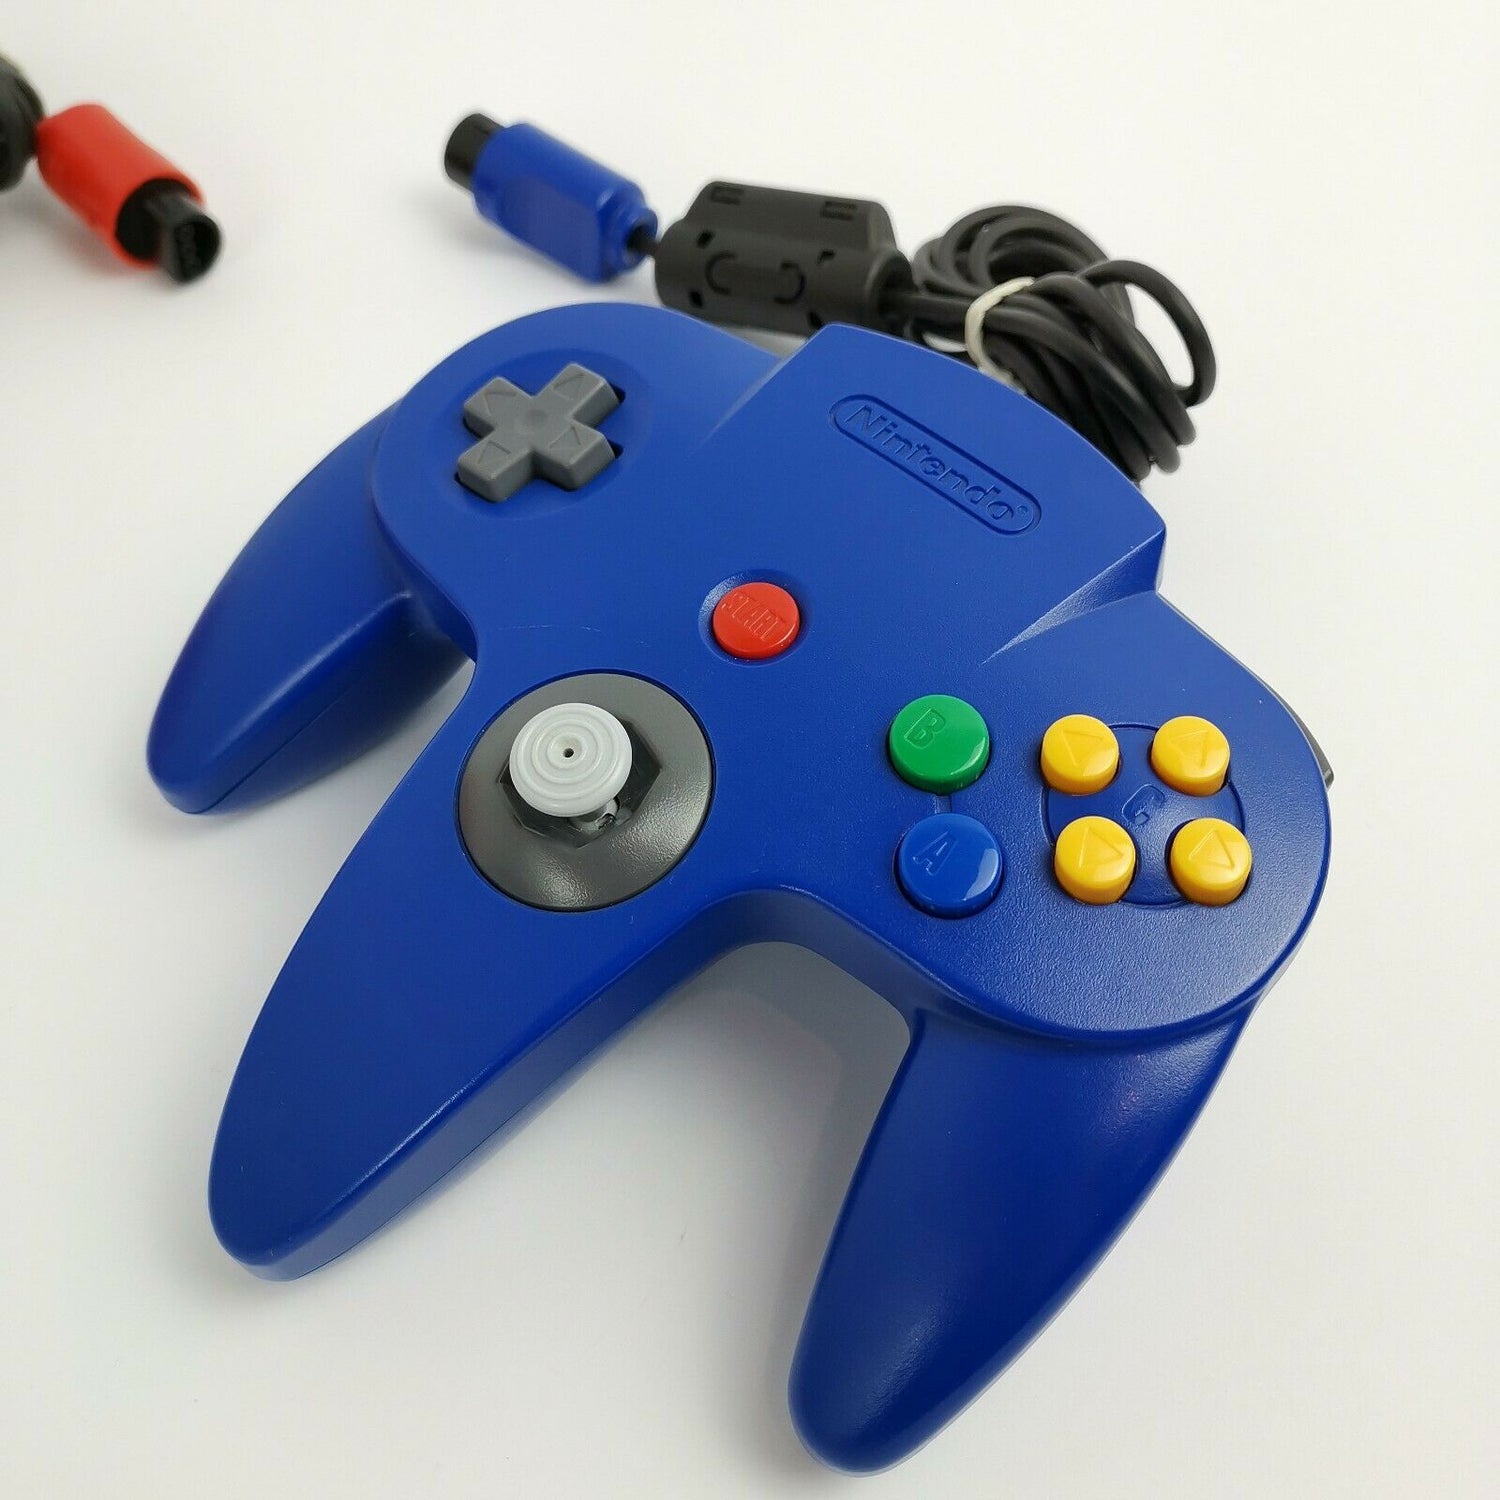 Nintendo 64 Controller Red & Blue | N64 Gamepads Joypads | Accessories | N64